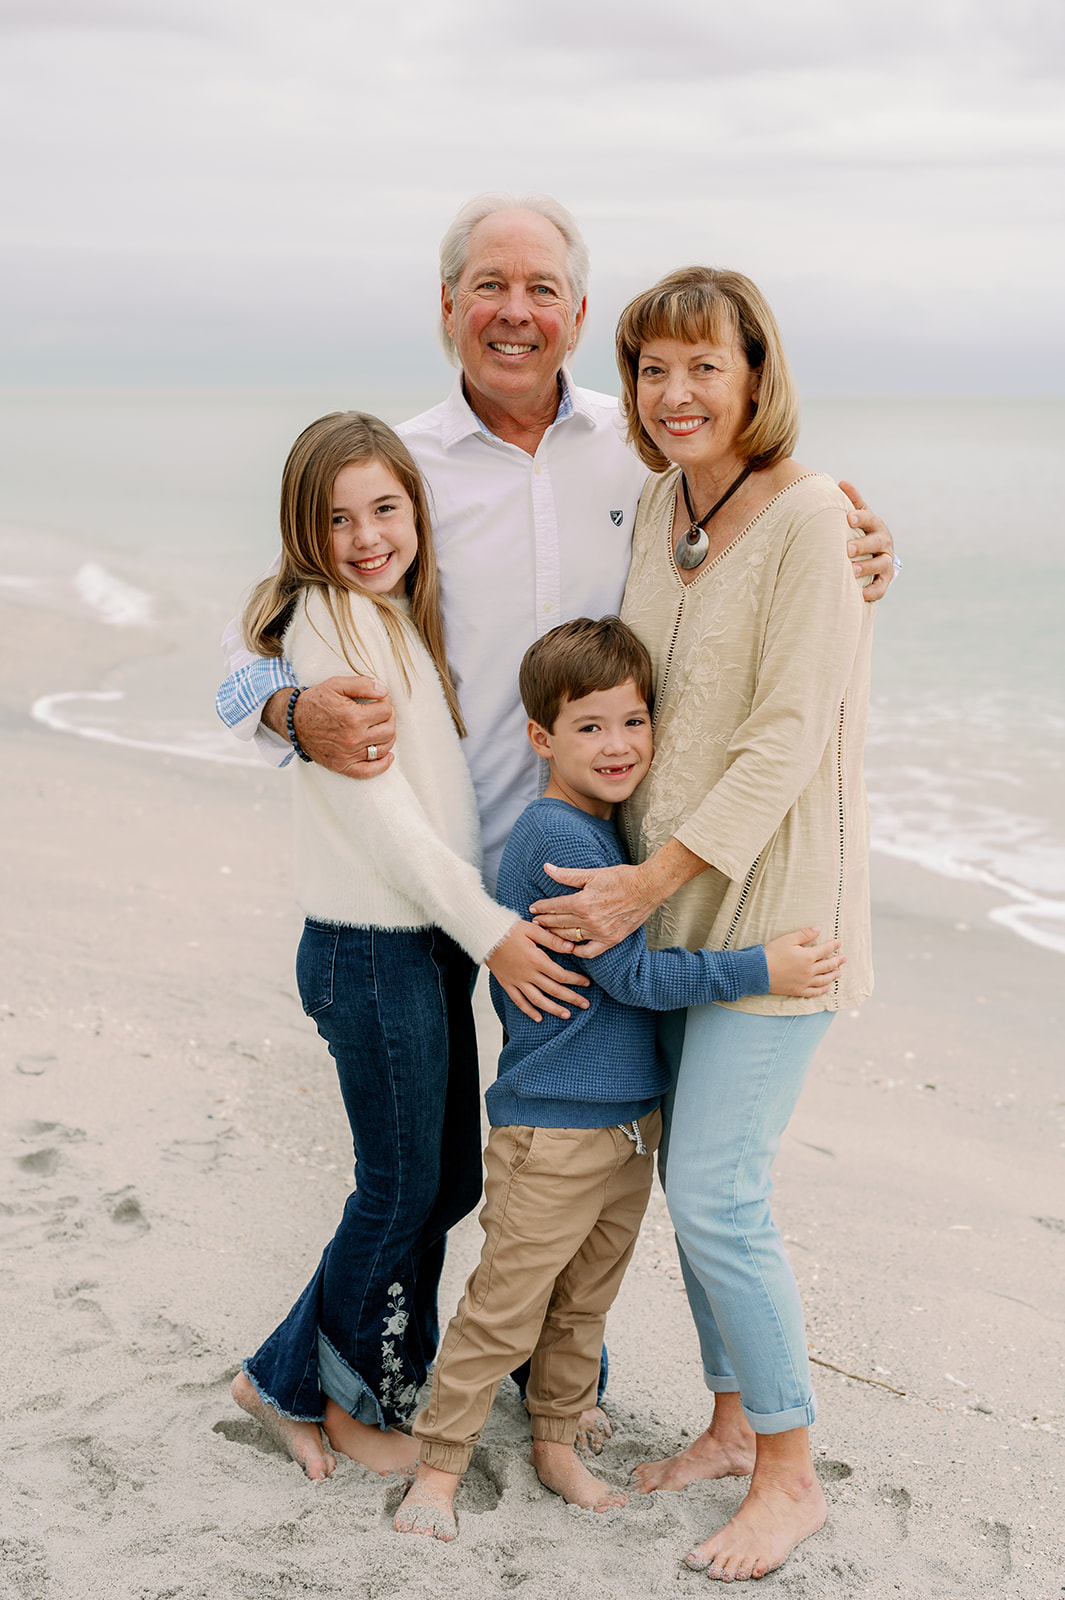 Rainy beach day family photoshoot on Manasota Key in Englewood, Florida